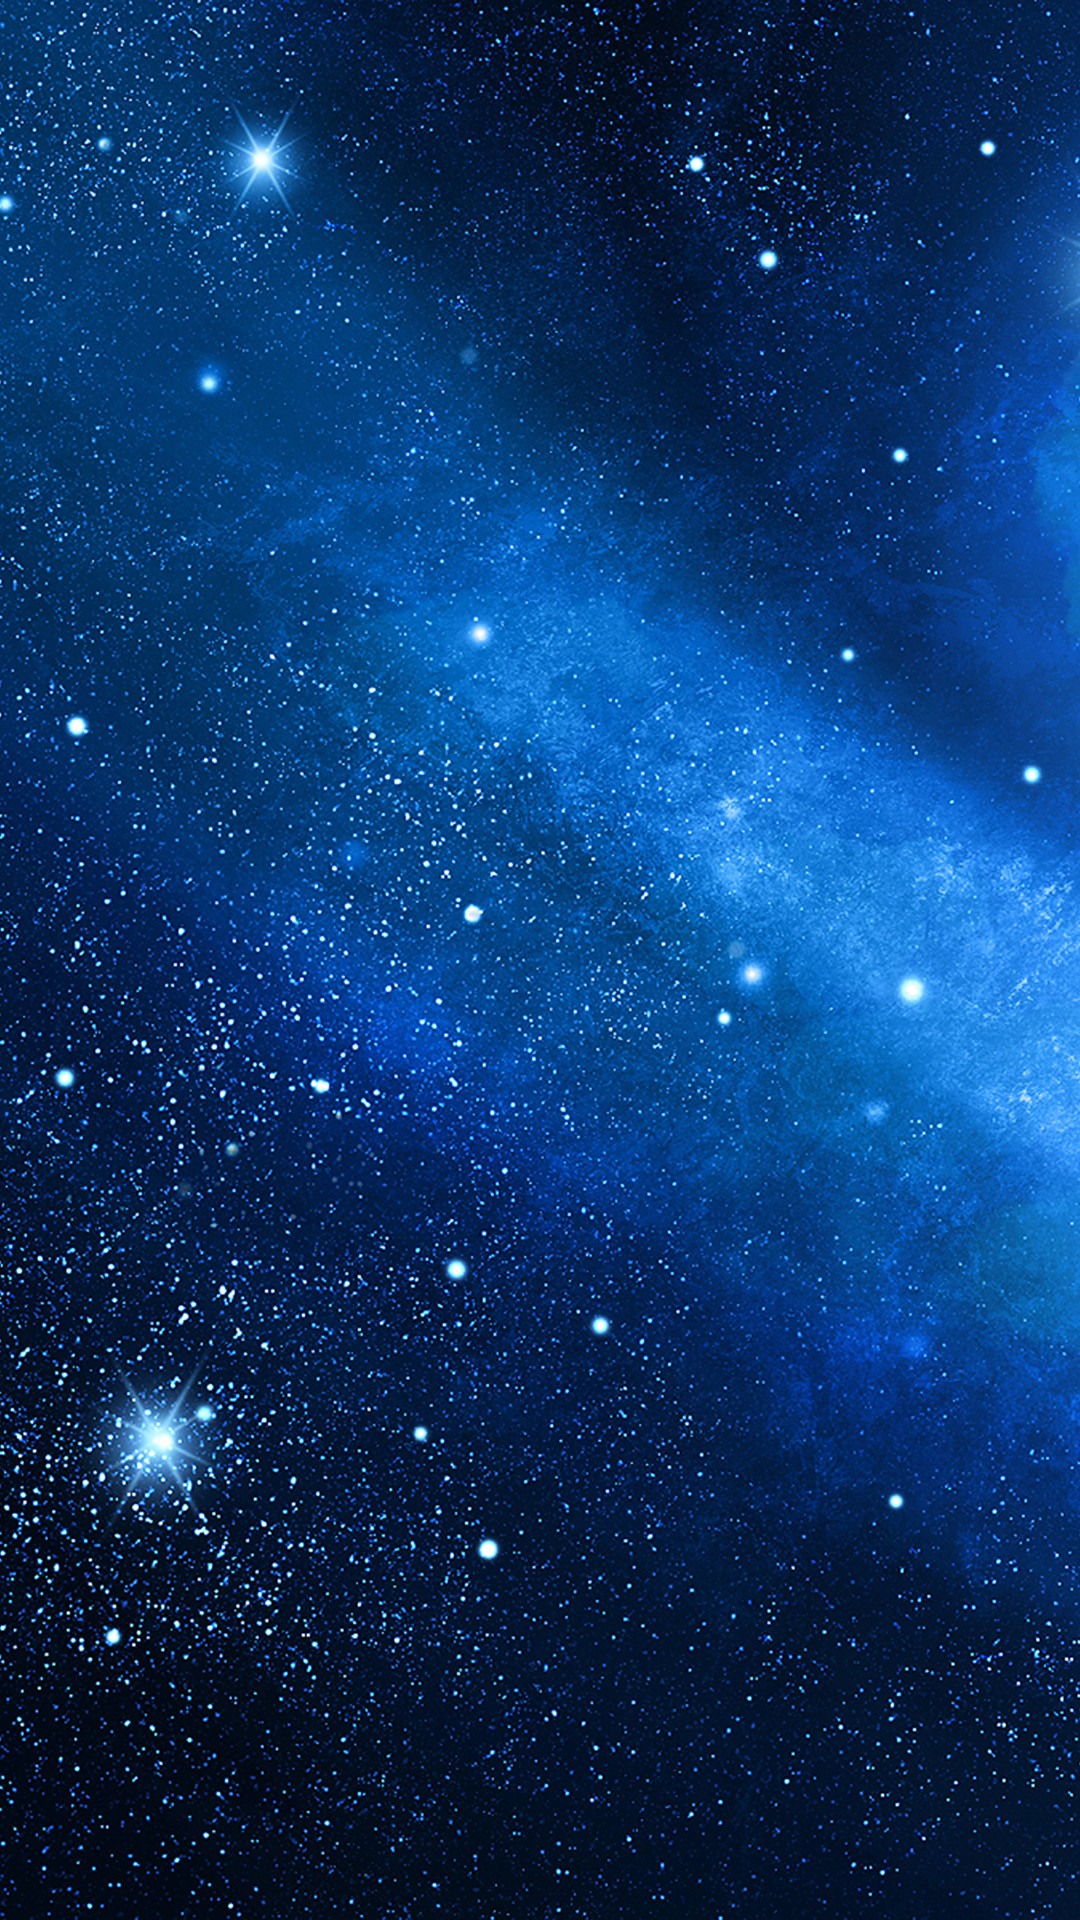 Explore Galaxy Wallpaper, Iphone 6 Wallpaper, and more!